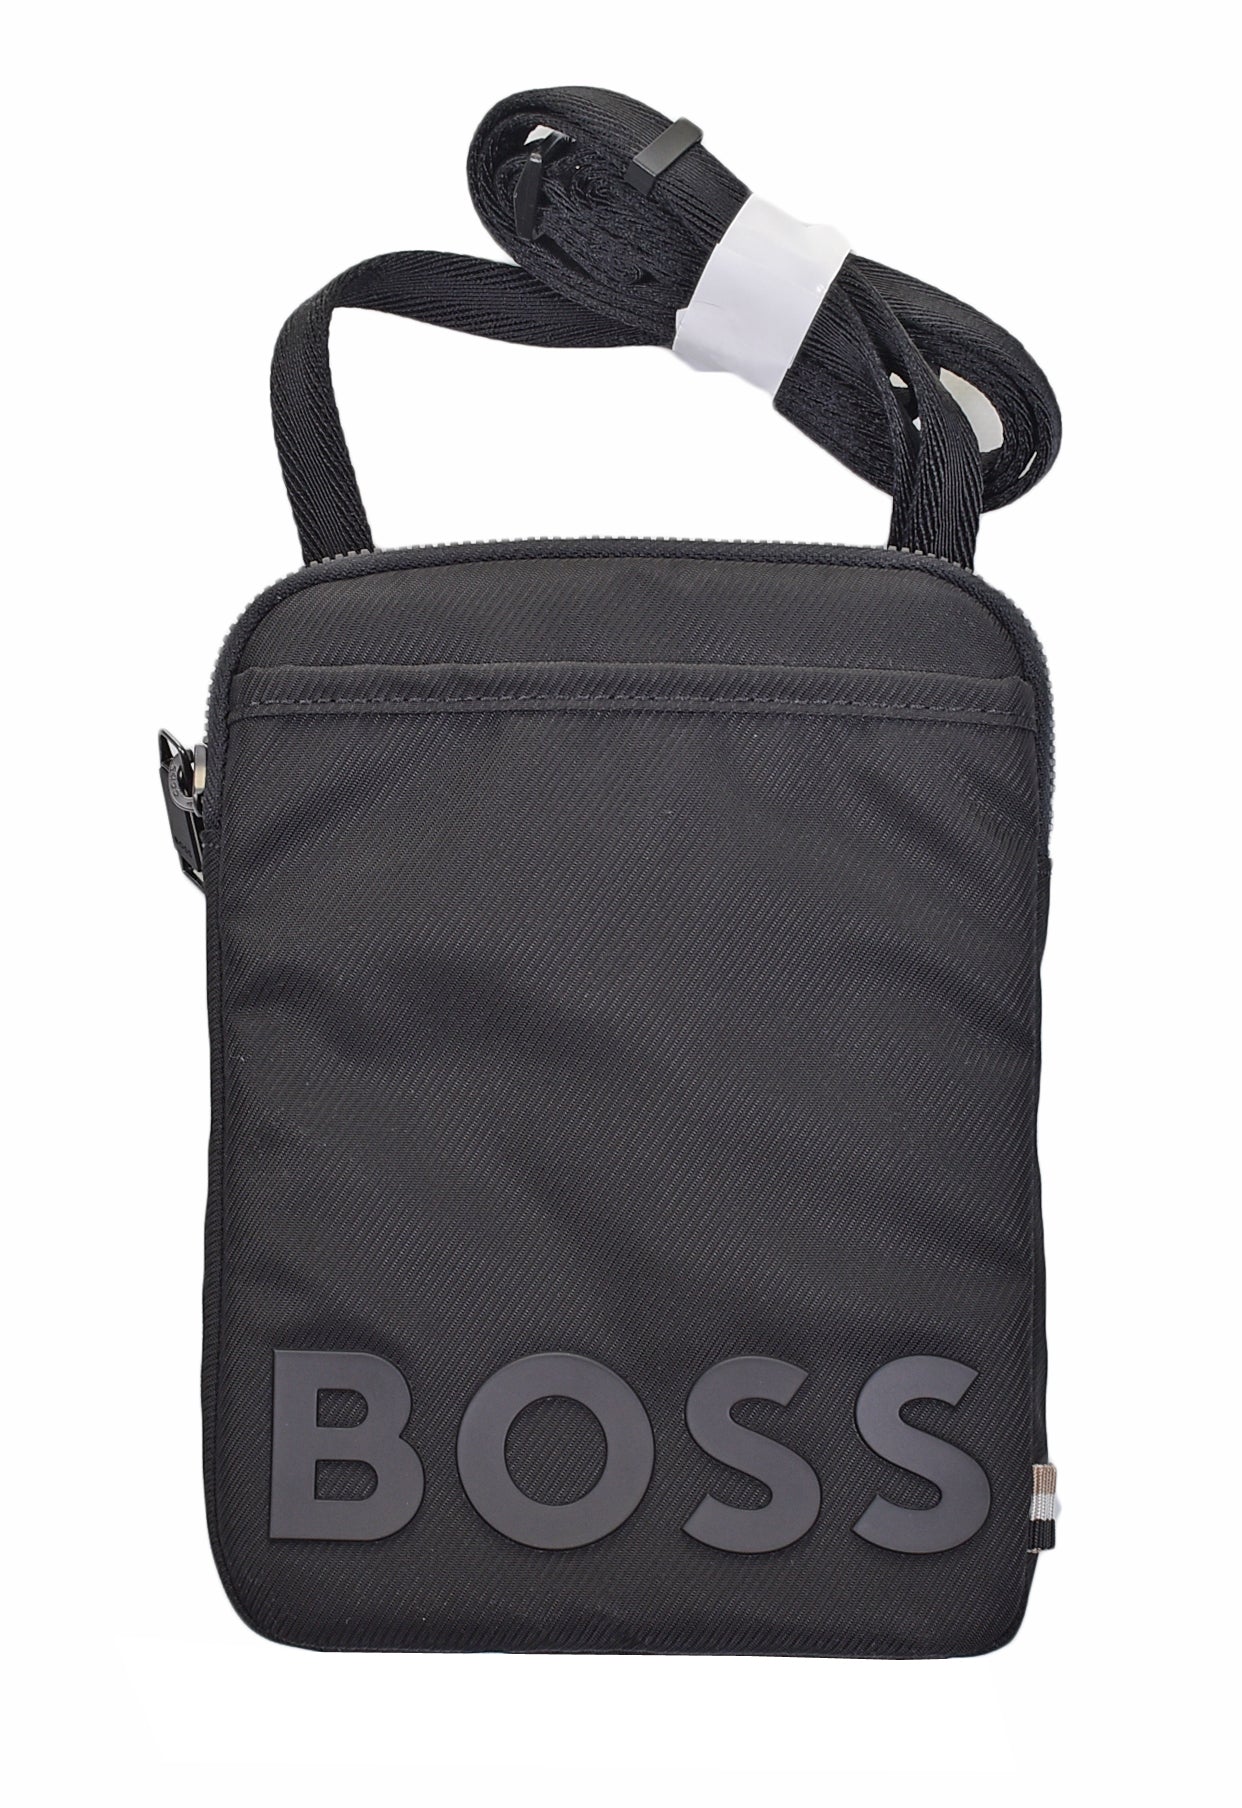 BOSS Catch Phone Bag Black – Ragazzi Clothing